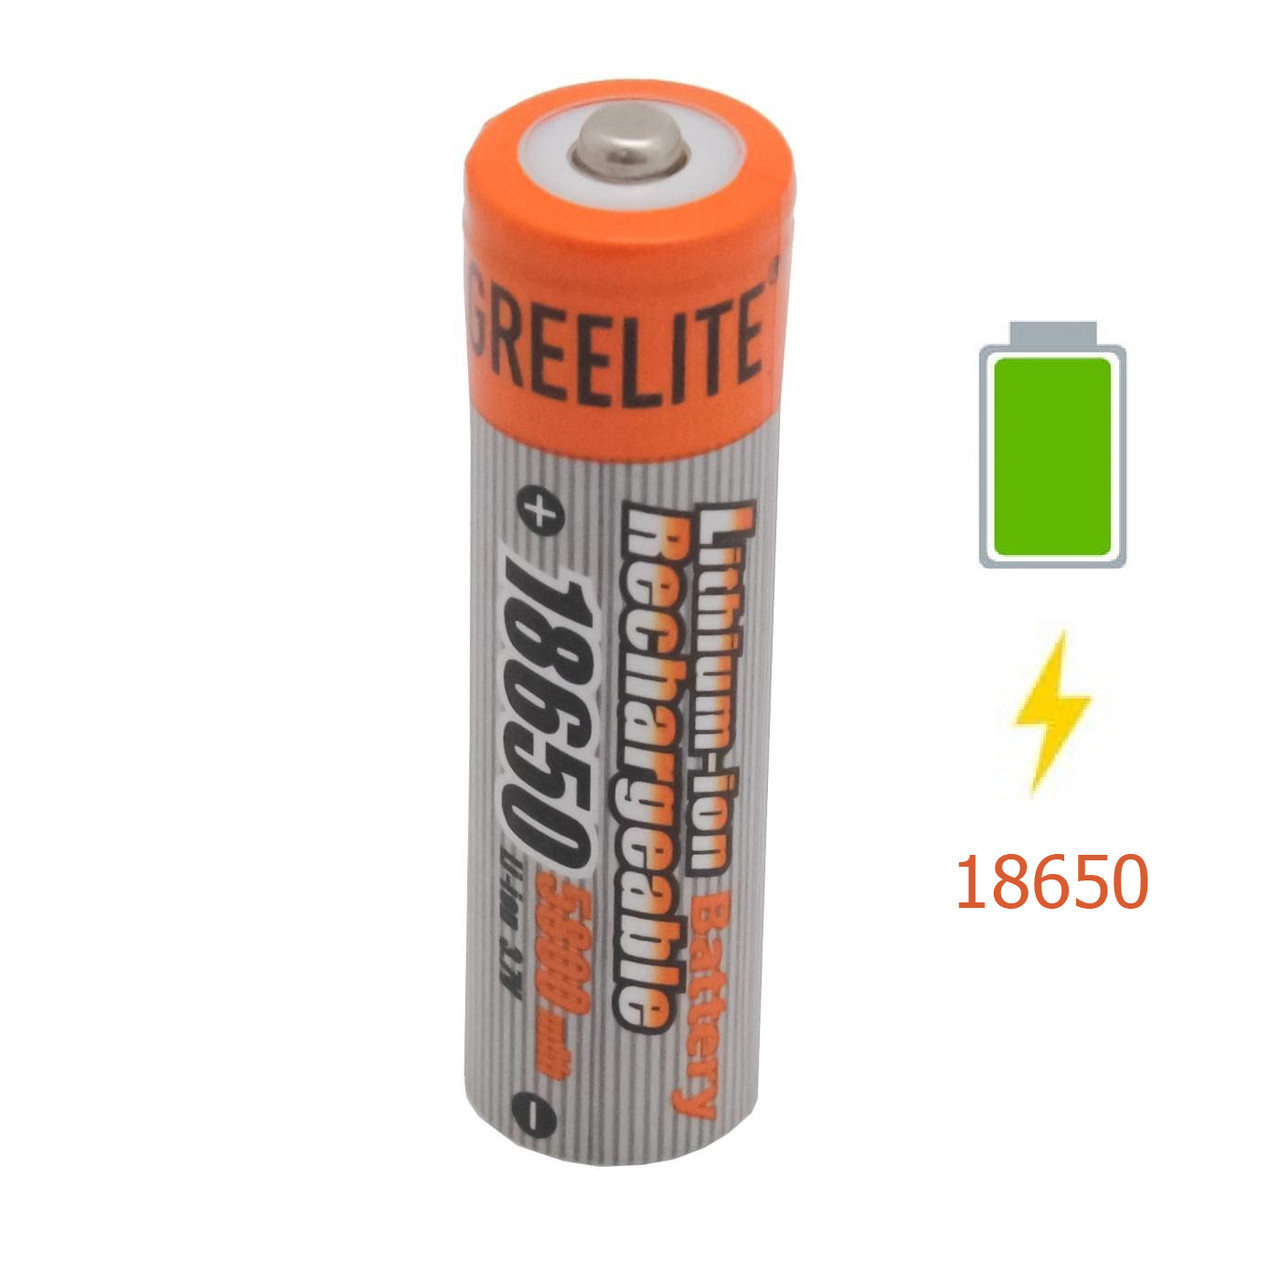 Акумулятор батарейка GreeLite Li-ion 18650 3.7V 5800 mAh, фото 1